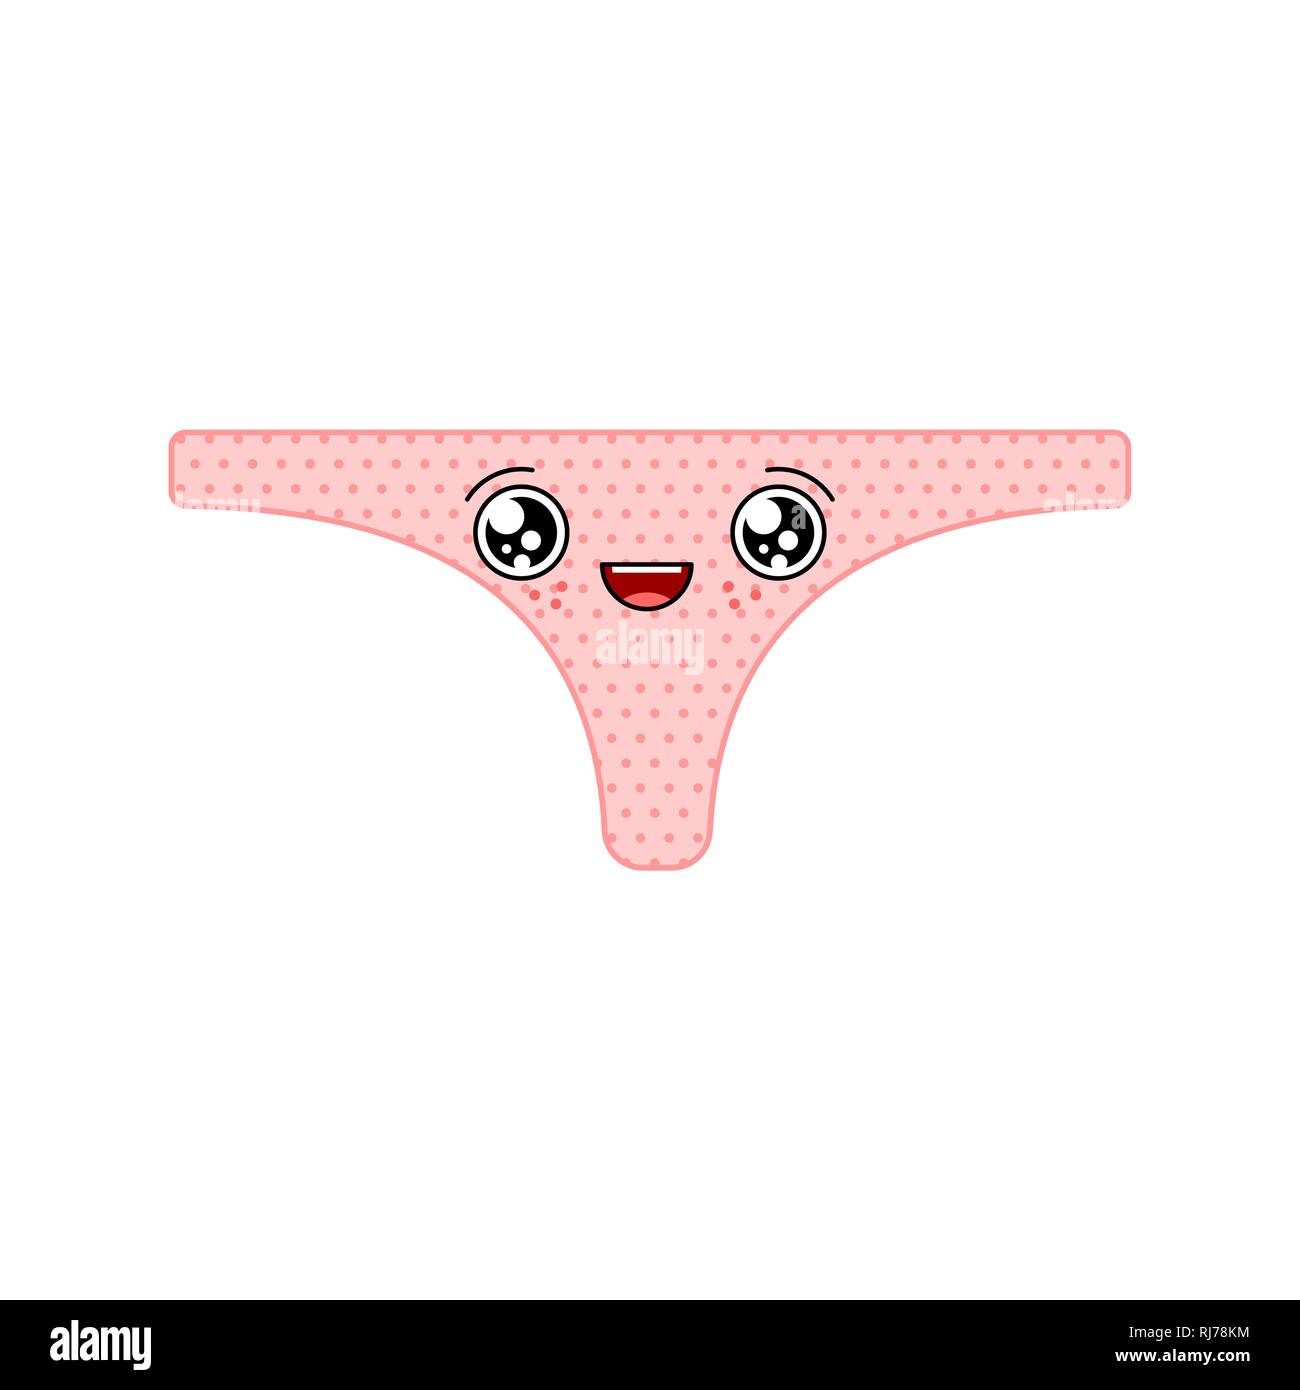 https://c8.alamy.com/comp/RJ78KM/thong-kawaii-cute-cartoon-funny-underpants-sweet-womens-panties-vector-illustration-RJ78KM.jpg